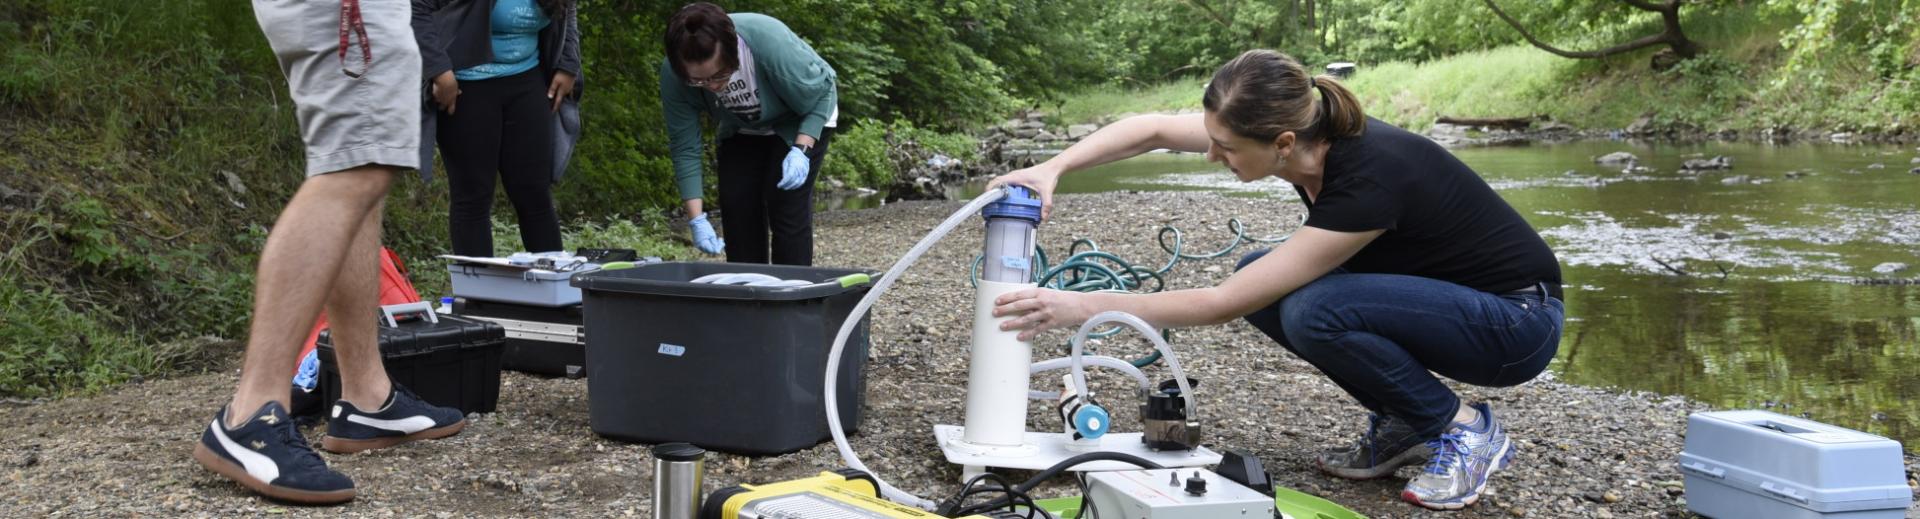 Environmental health class testing river water